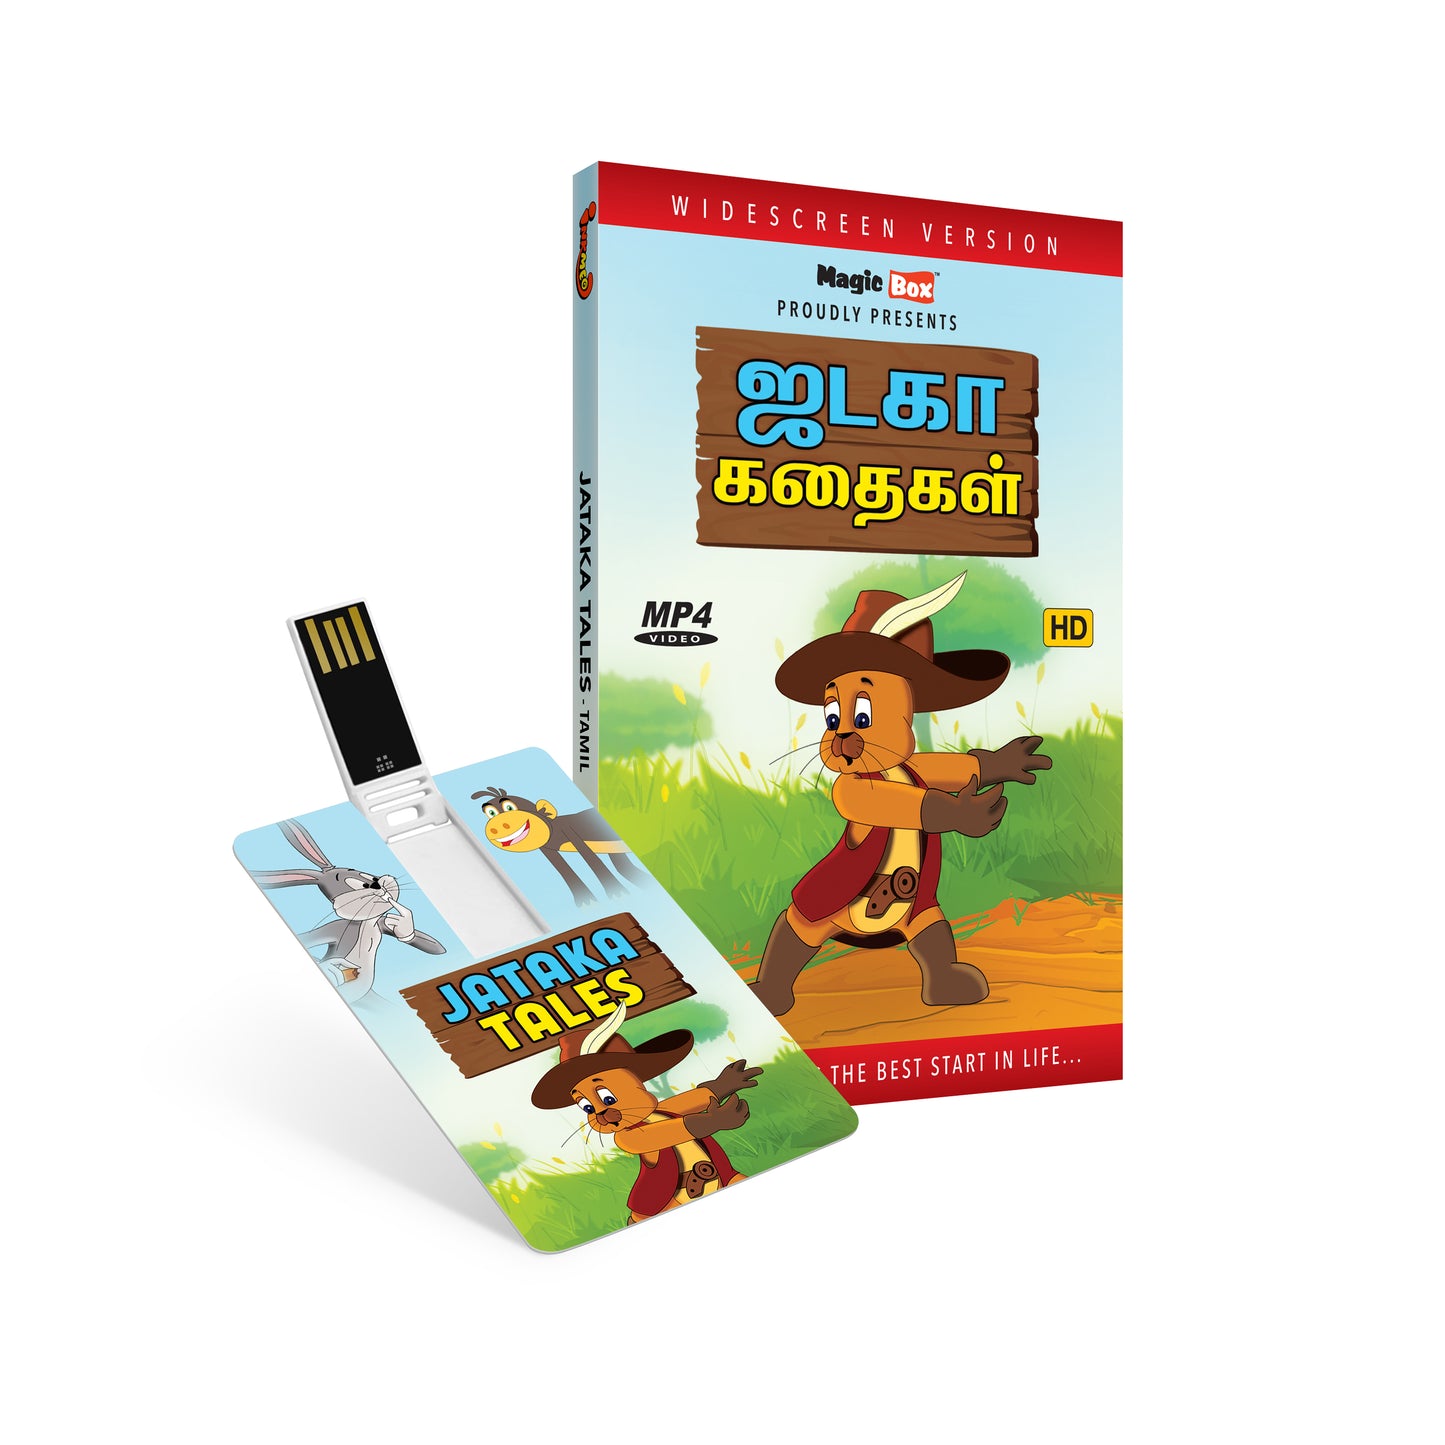 Jataka Tales - Tamil